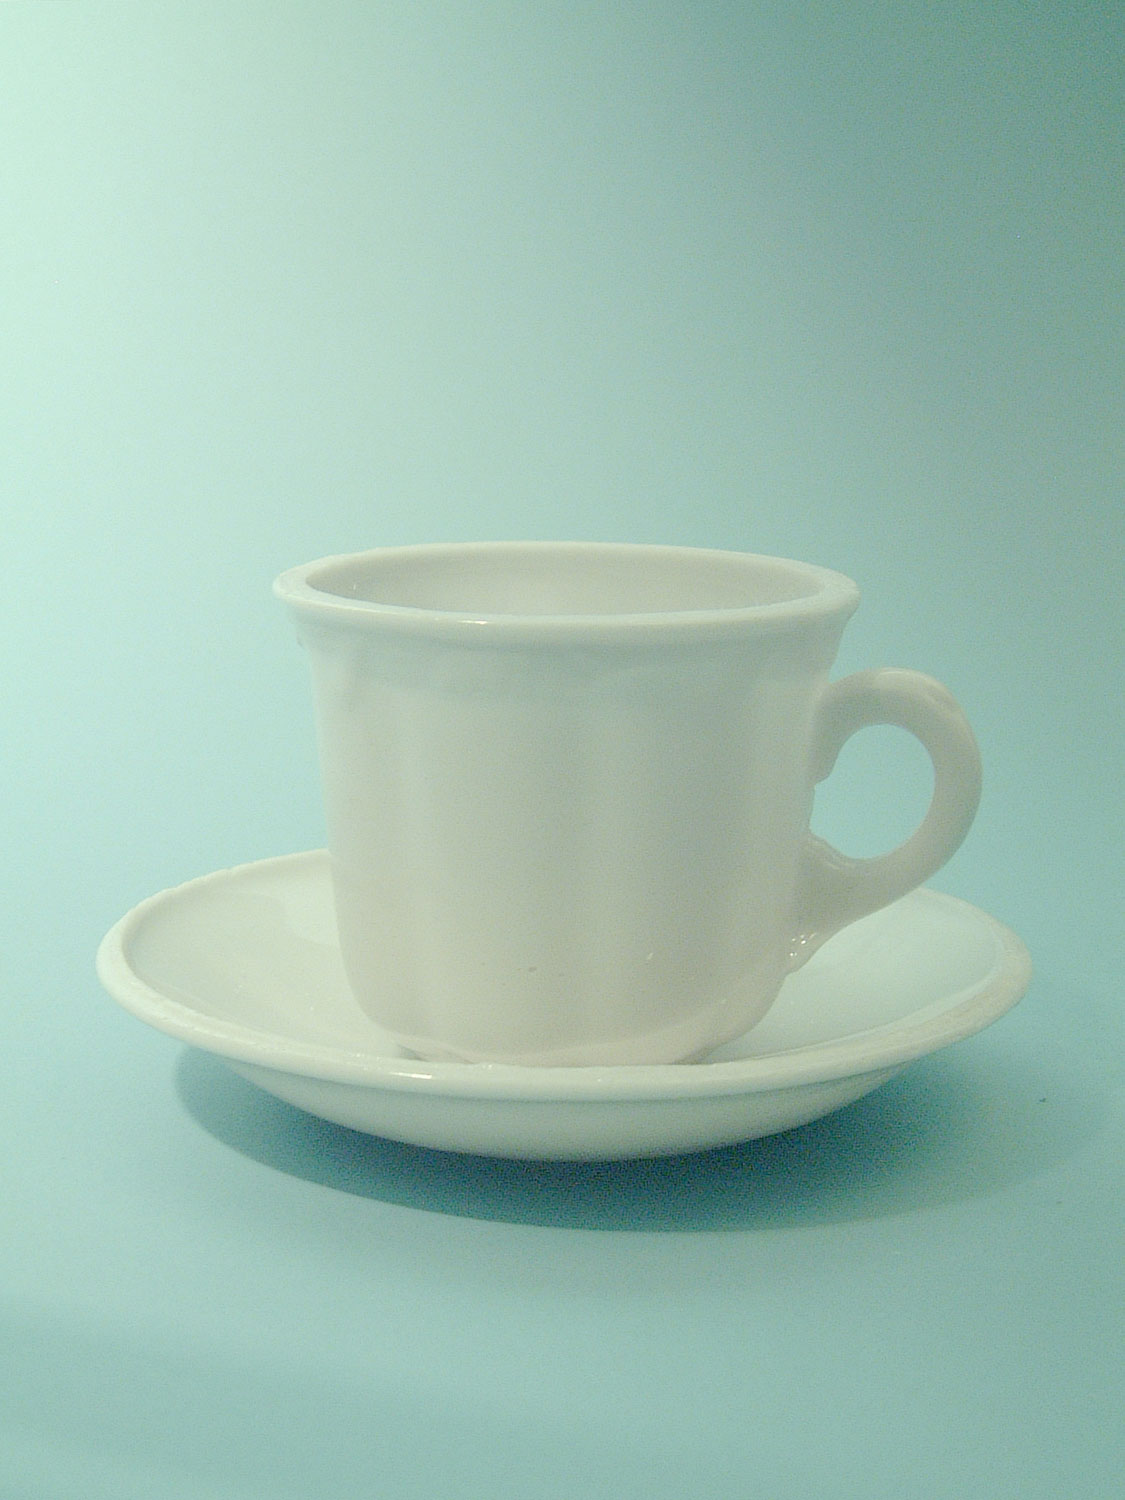 Suikerglas thee - koffiekopje. Model nummer 3!